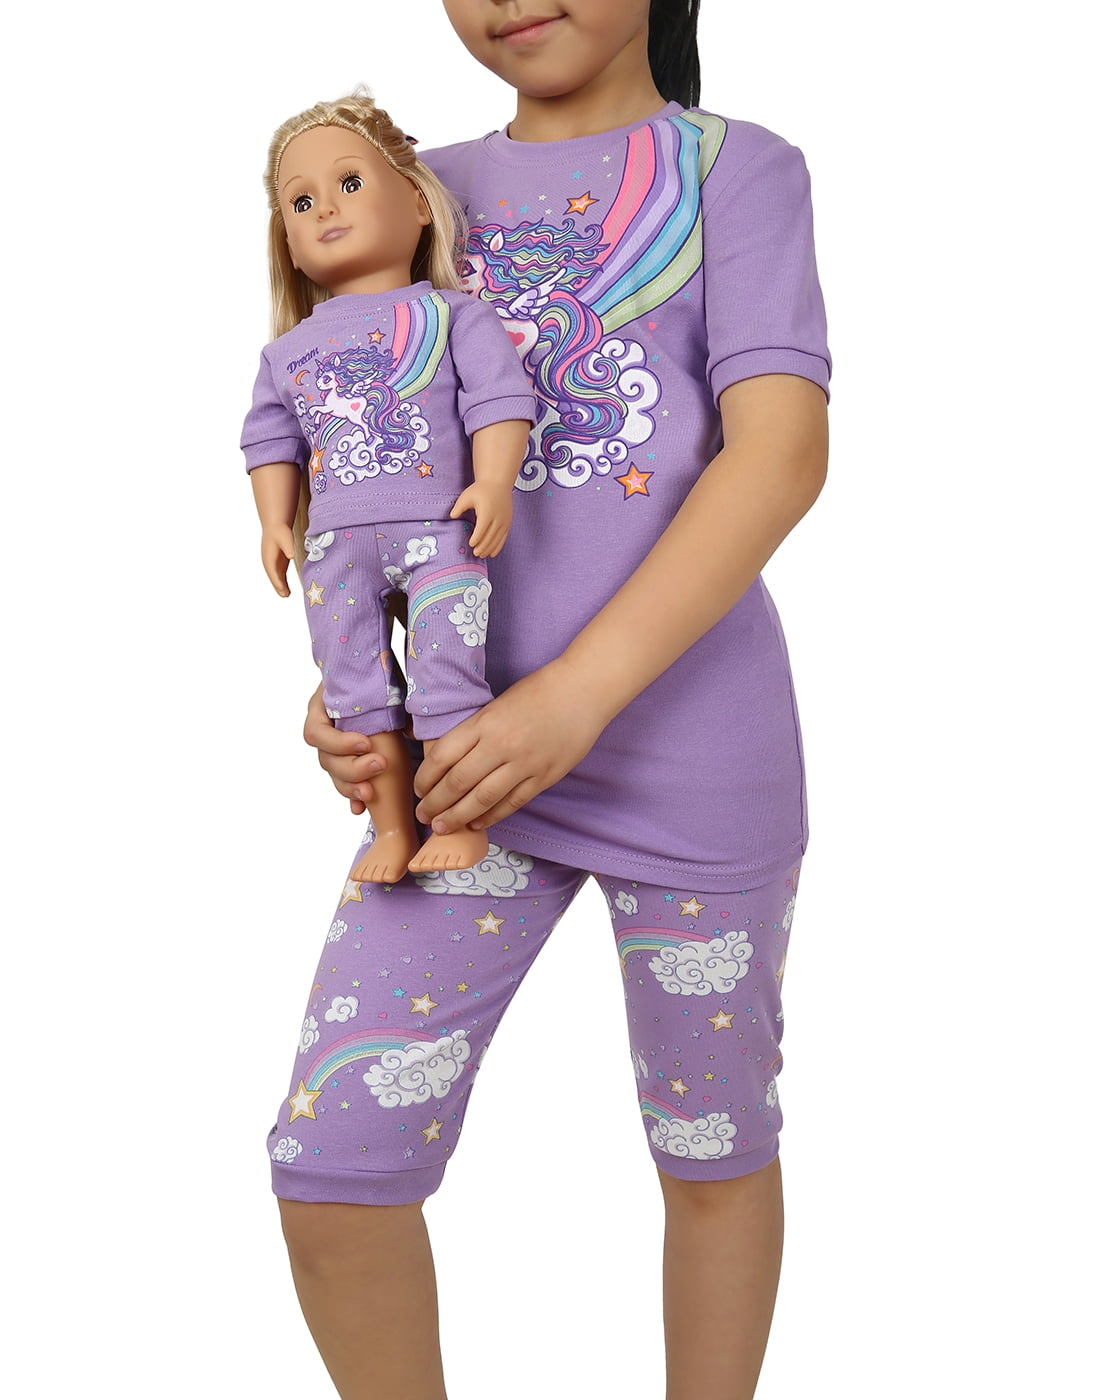 American Girl girls pajamas - lapfans.com